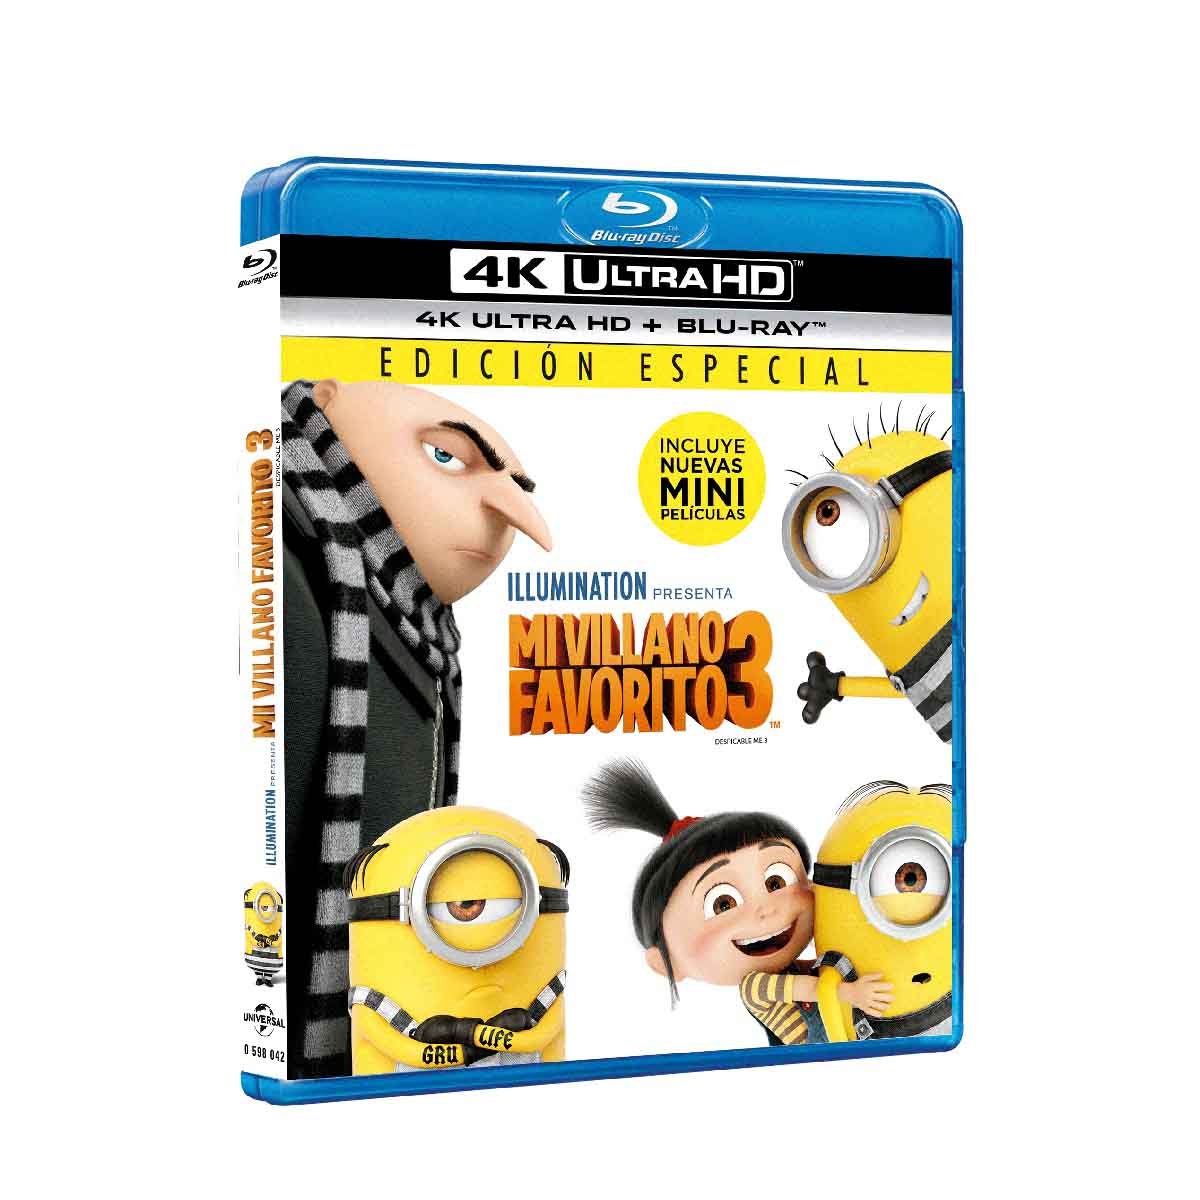 Blu Ray 4K Uhd + Blu Ray Mi Villano Favorito 3